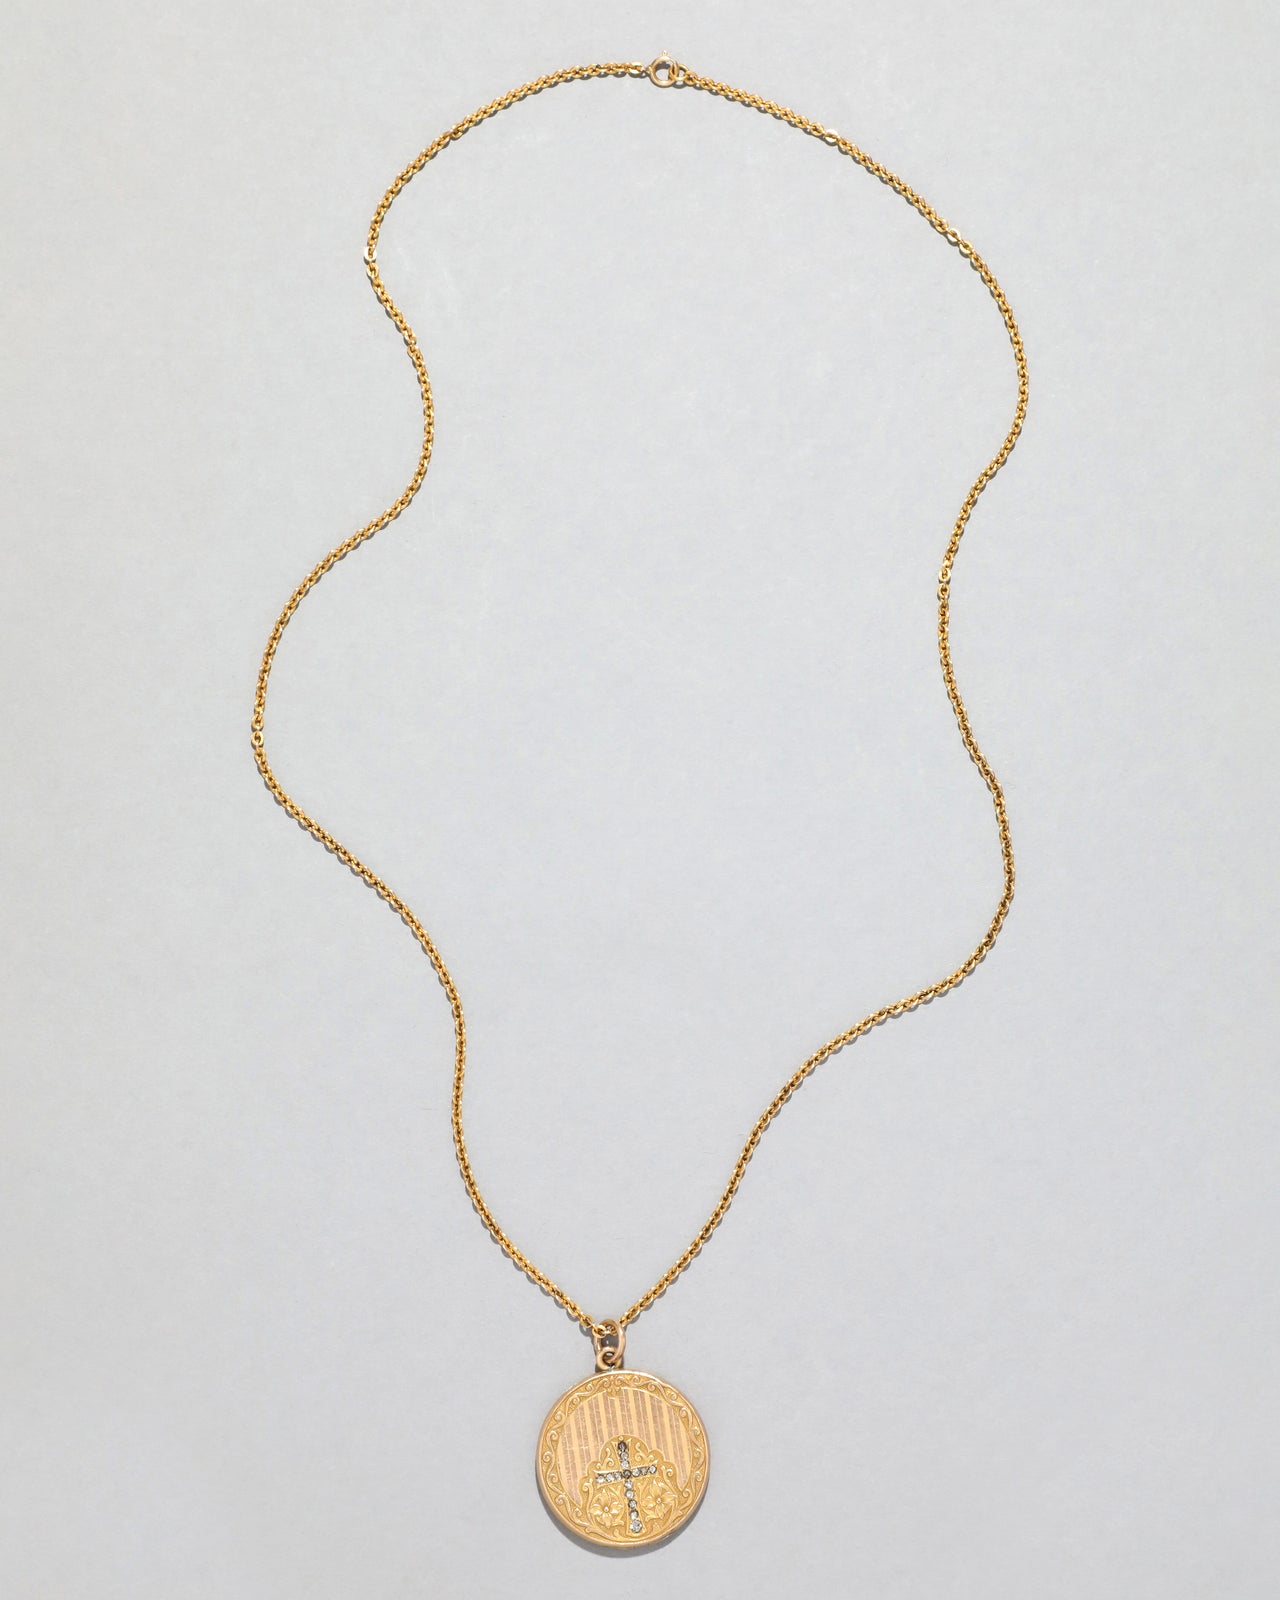 Antique 1920s 14k Gold Filled Crystal Cross Locket Necklace - Photo 2